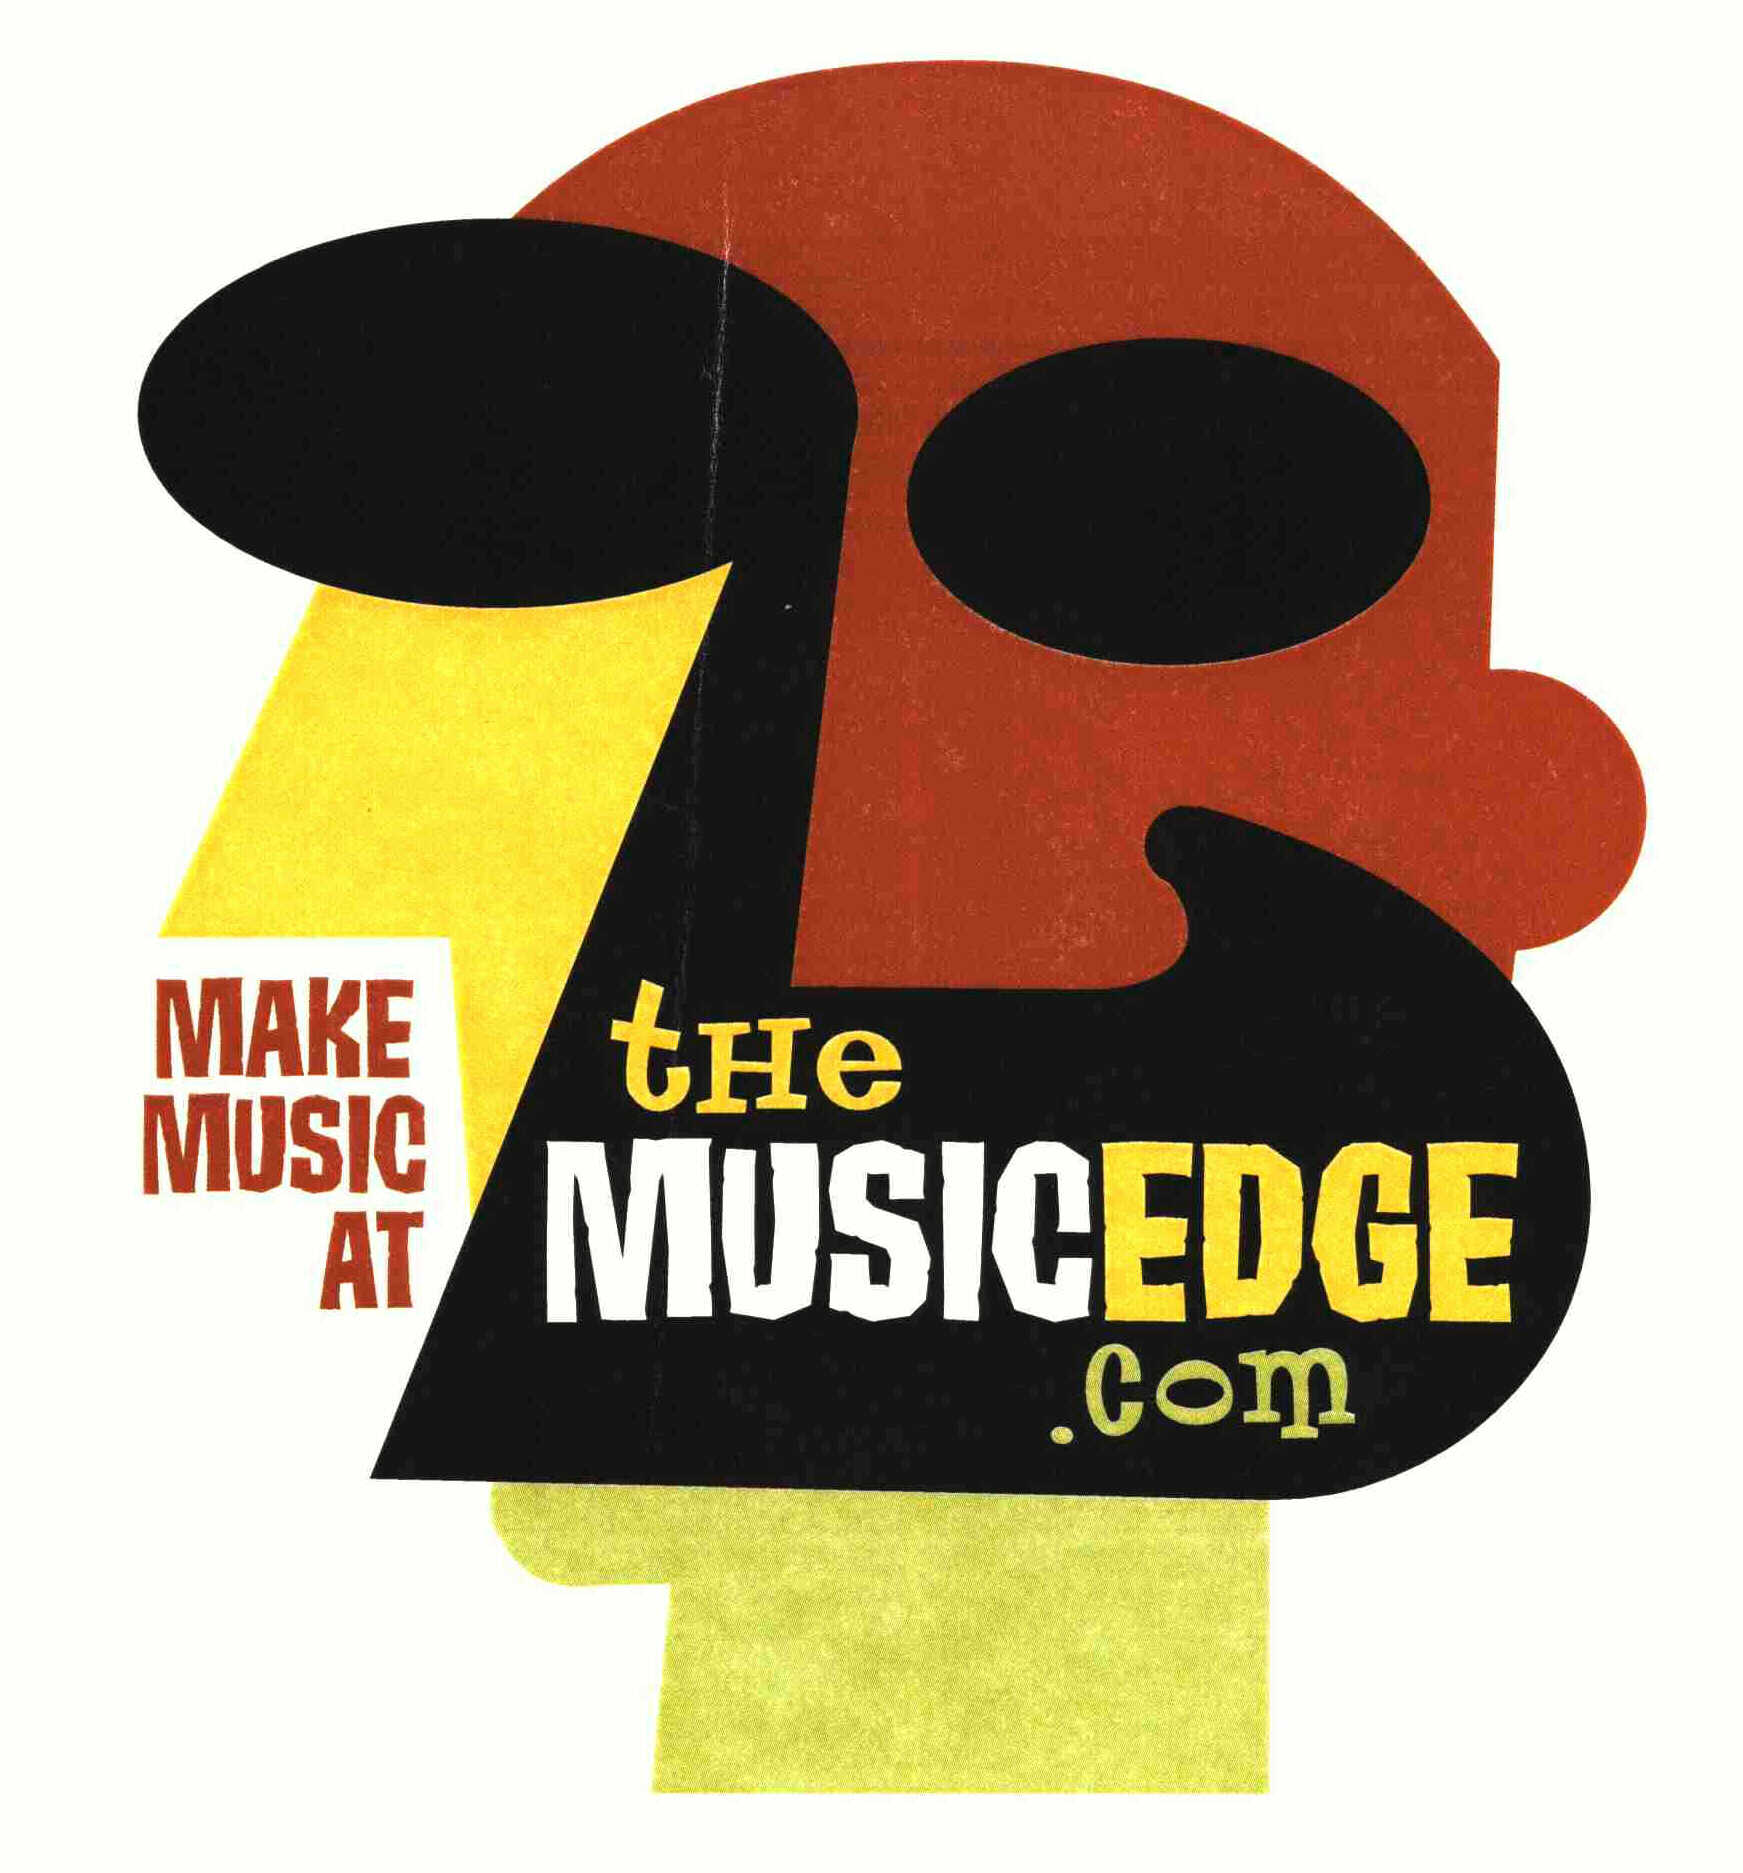  MAKE MUSIC AT THE MUSICEDGE.COM